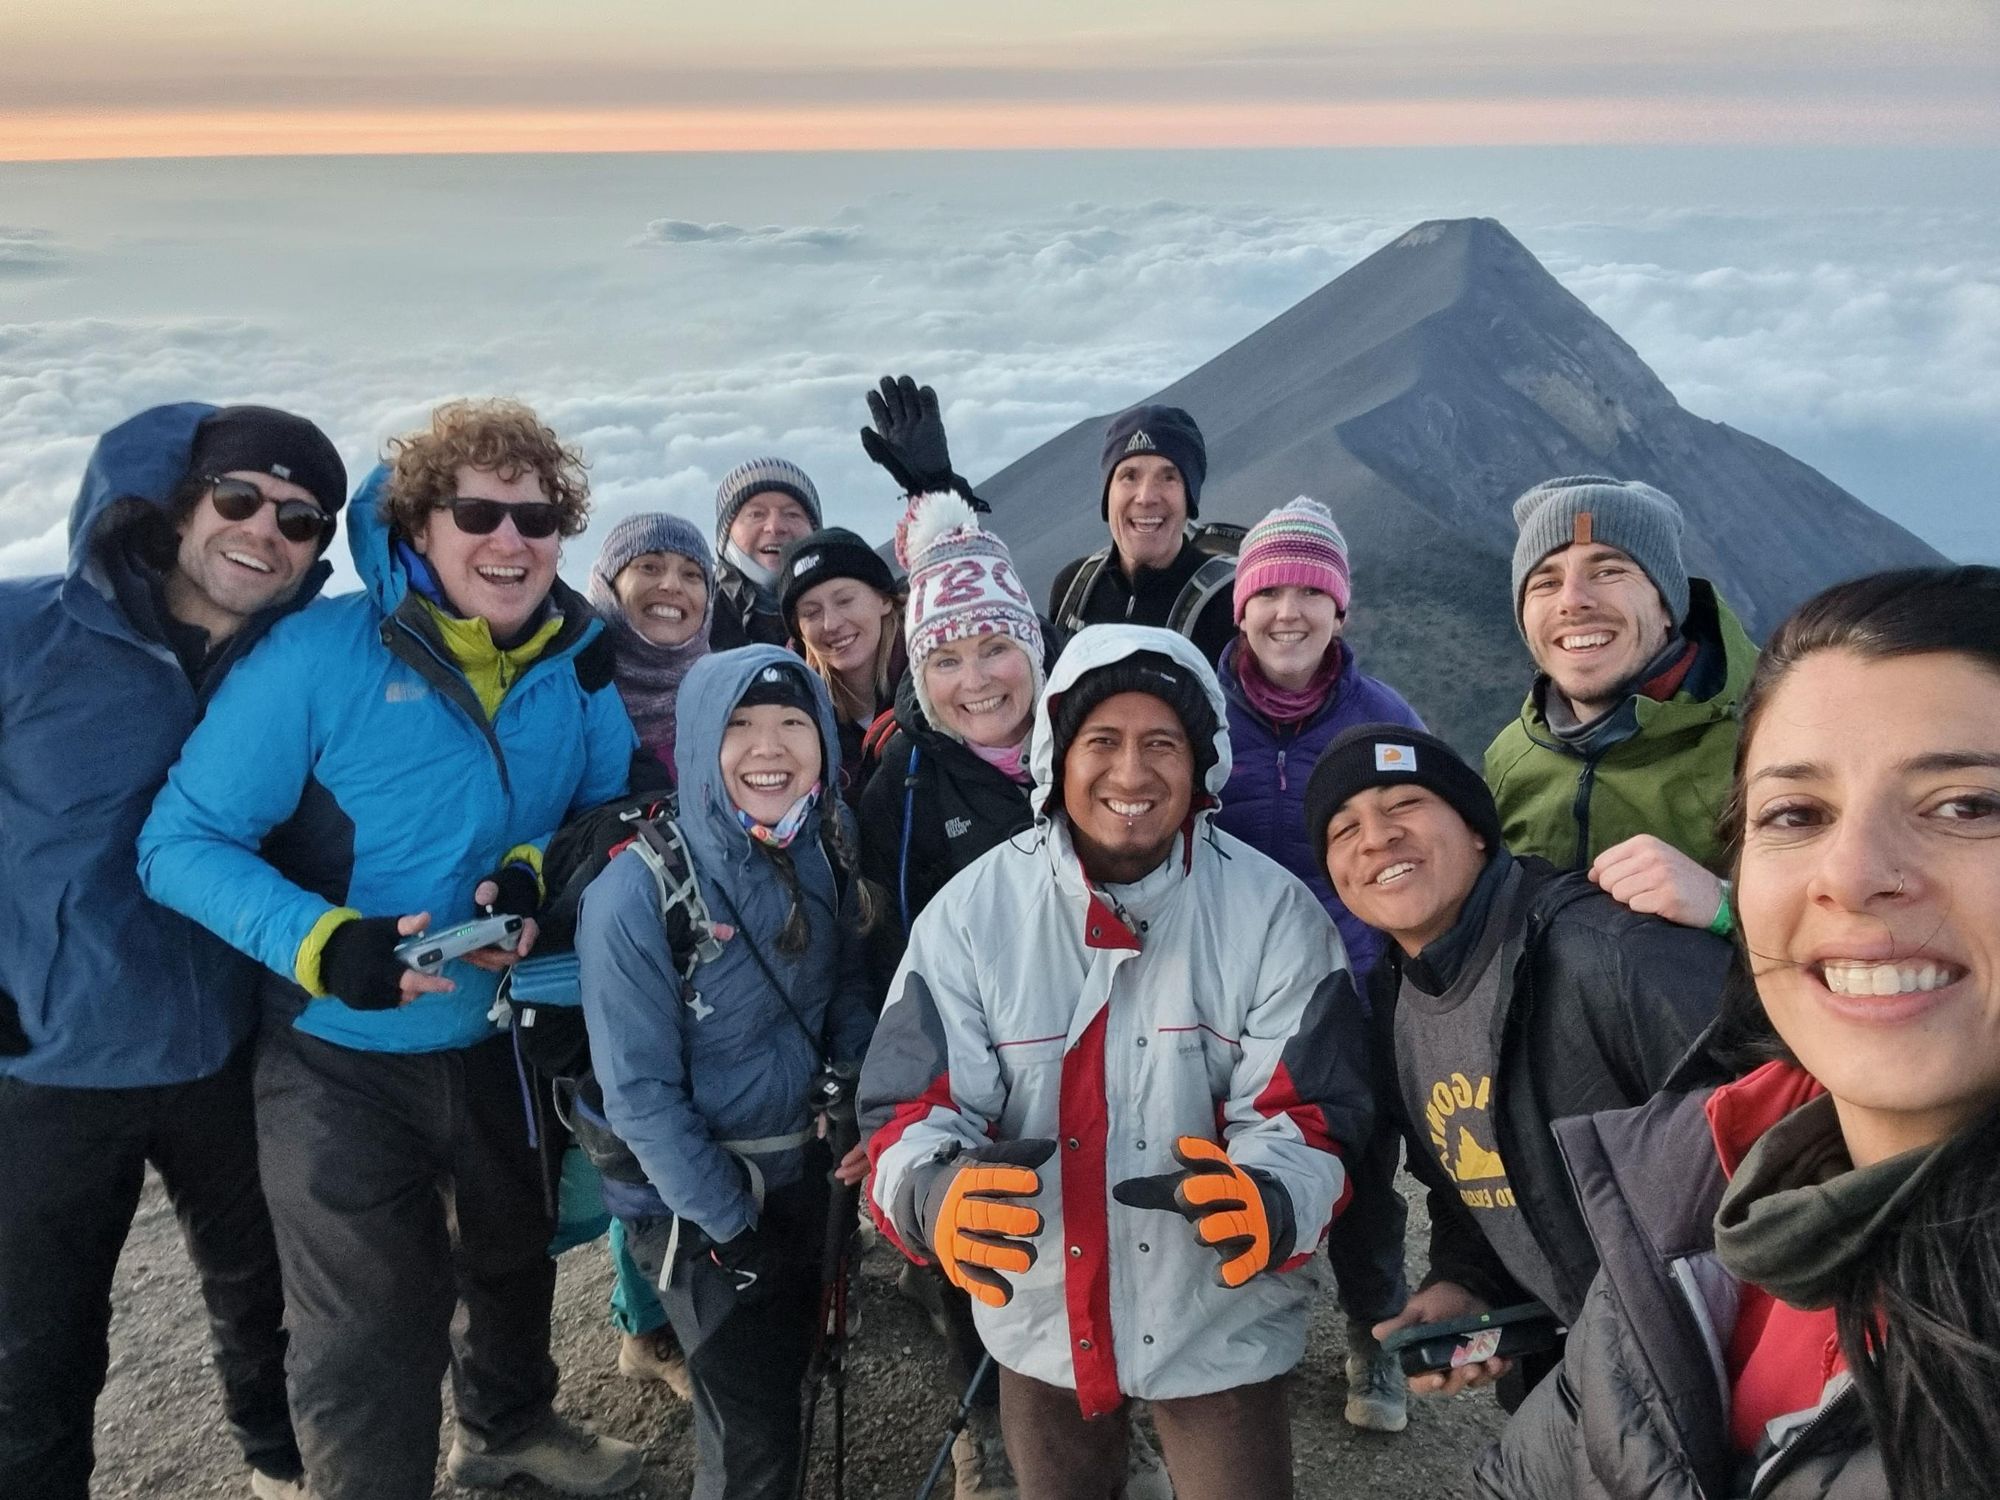 Hikers celebrate on the summit of Acatenango. Photo: Marta Marinelli.